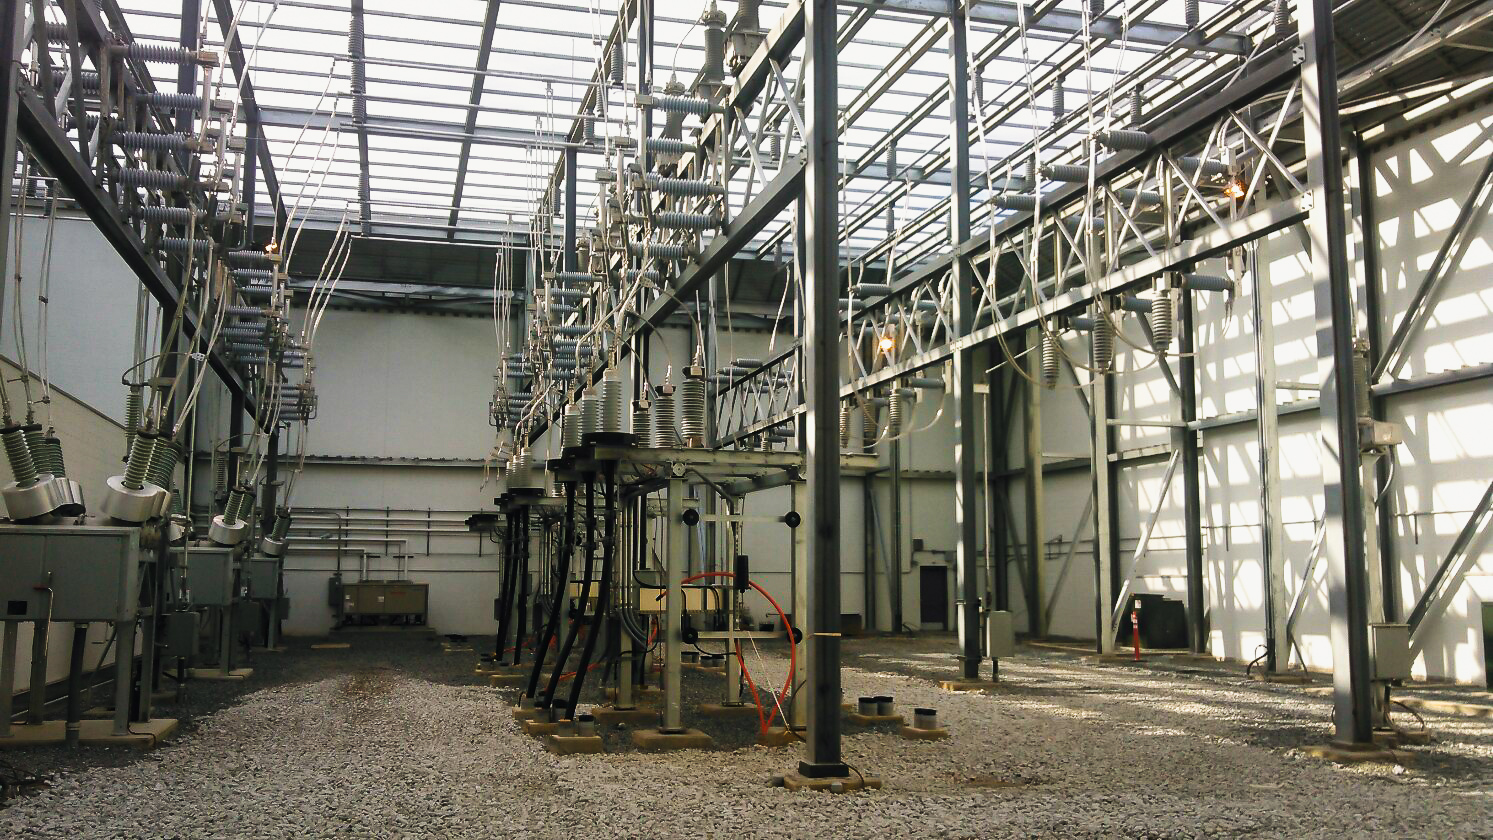 Inside a substation